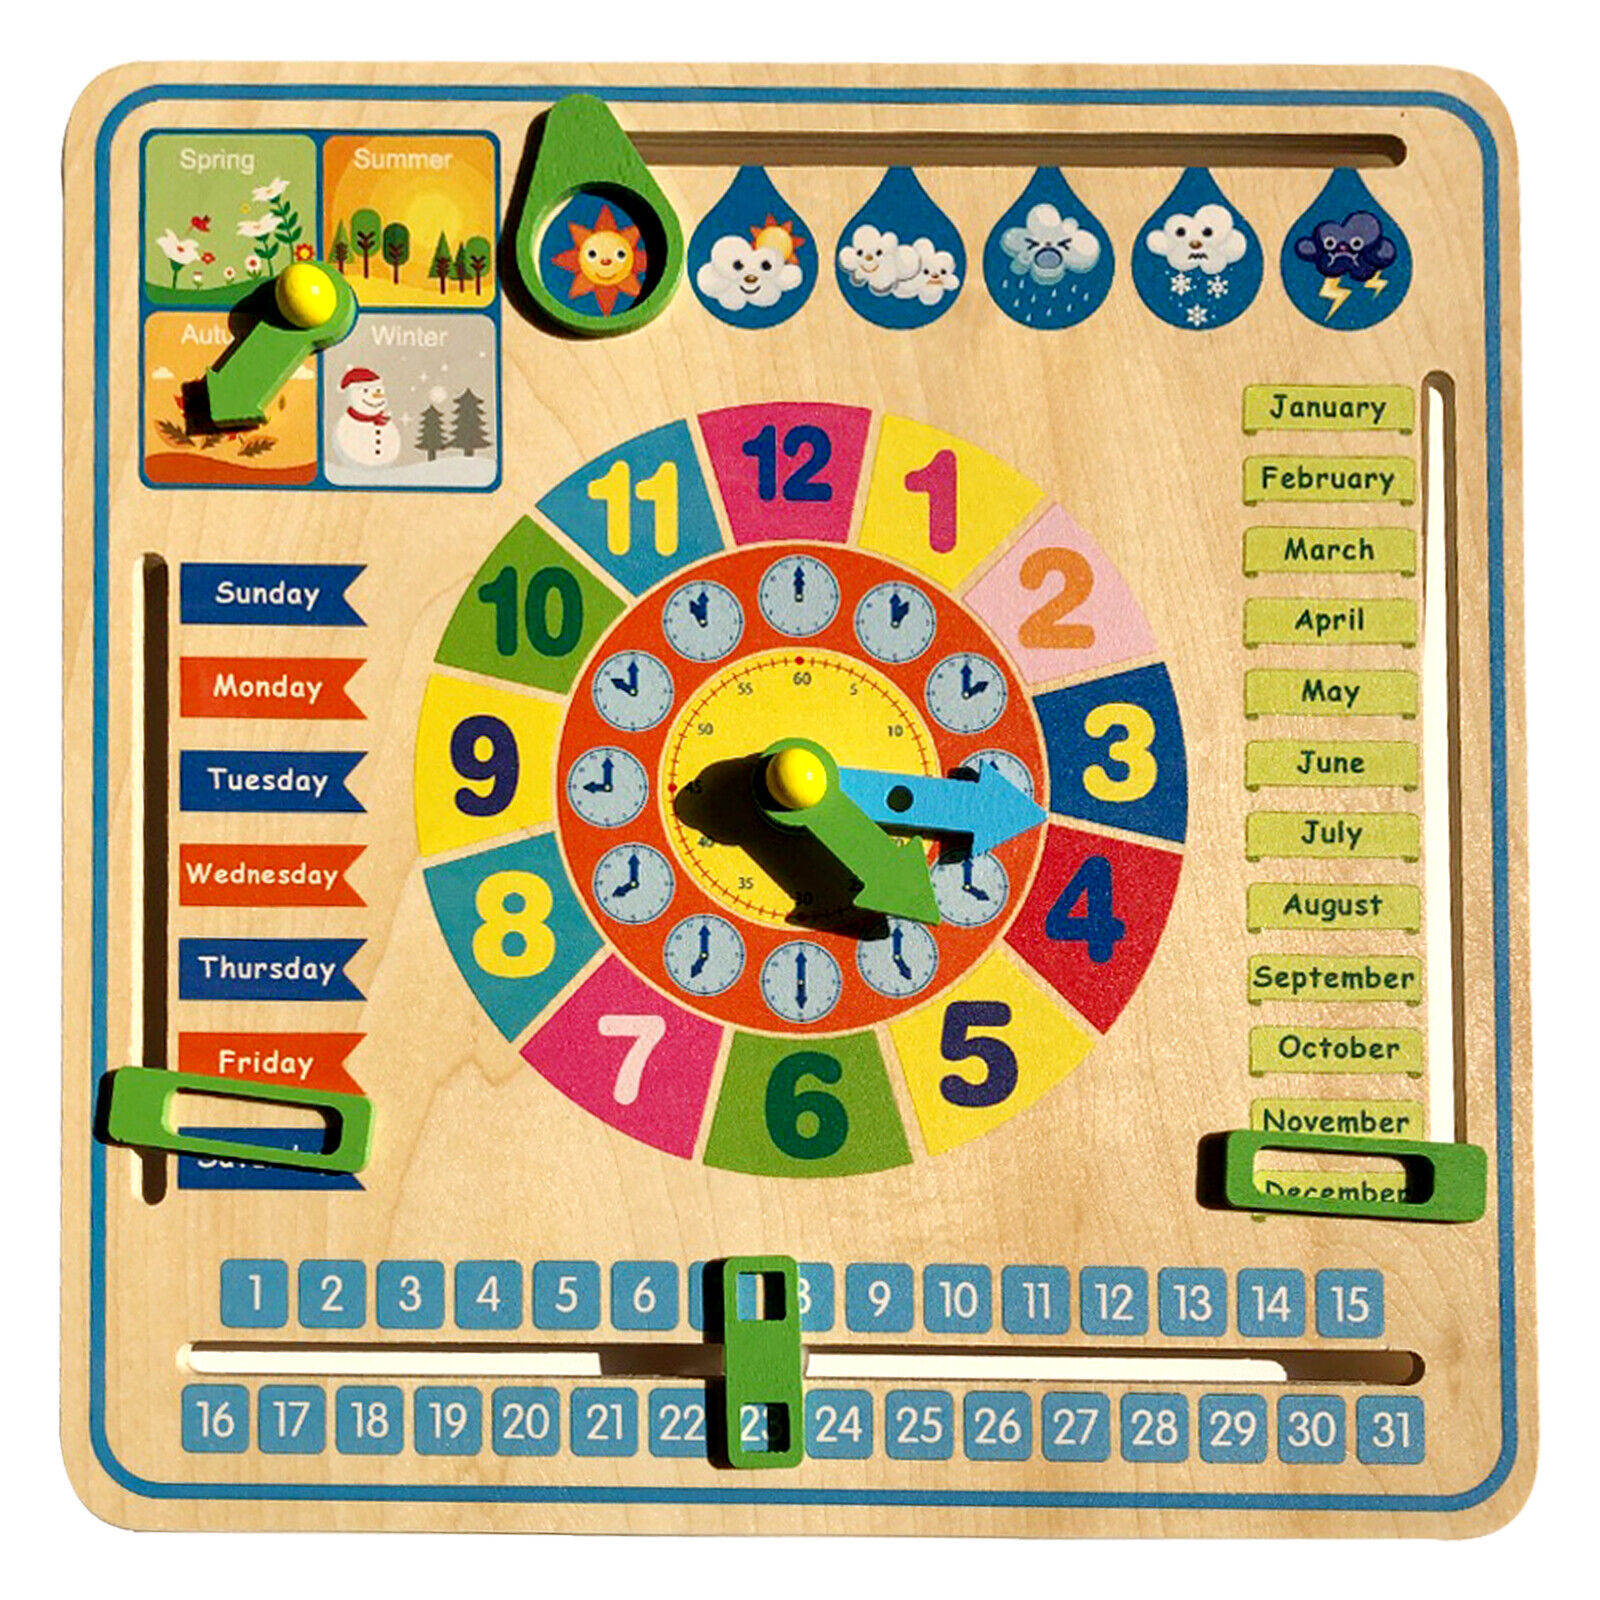 Kids Children Educational Wooden Calendar Board with Season Time Days Months Clock